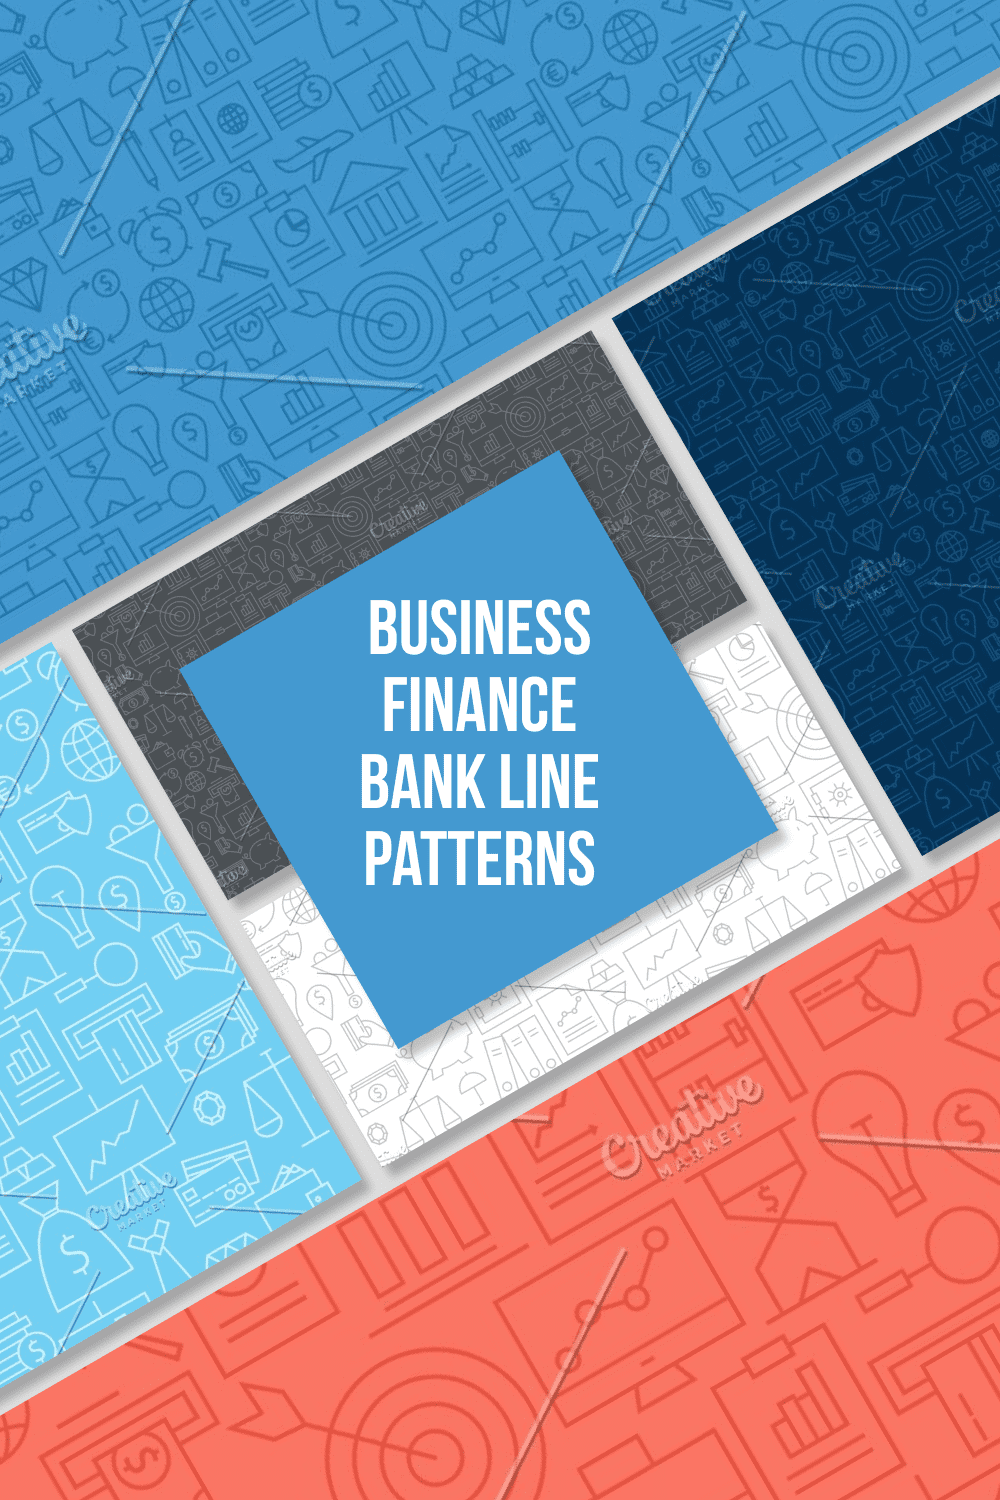 Business Finance Bank Line Patterns Pinterest.